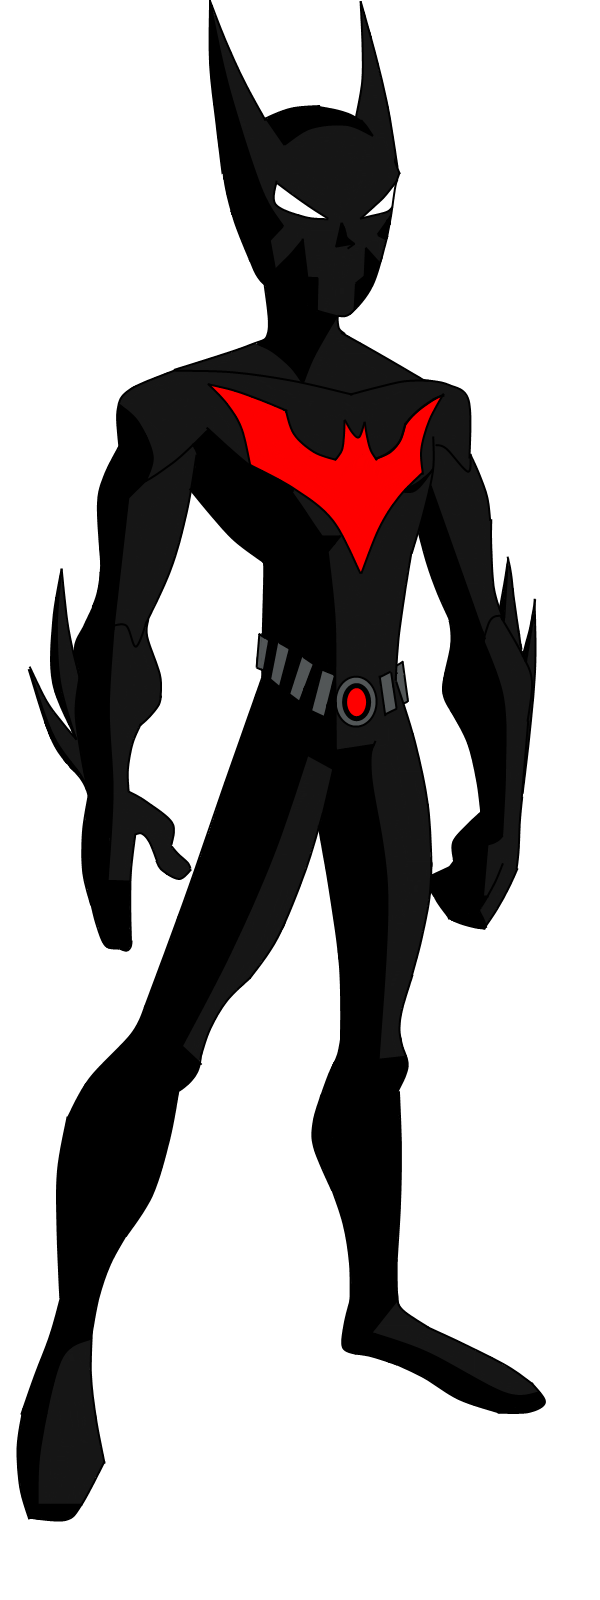 Spectacular Batman Beyond by ValrahMortem on DeviantArt - Teen Titans Red X Suit